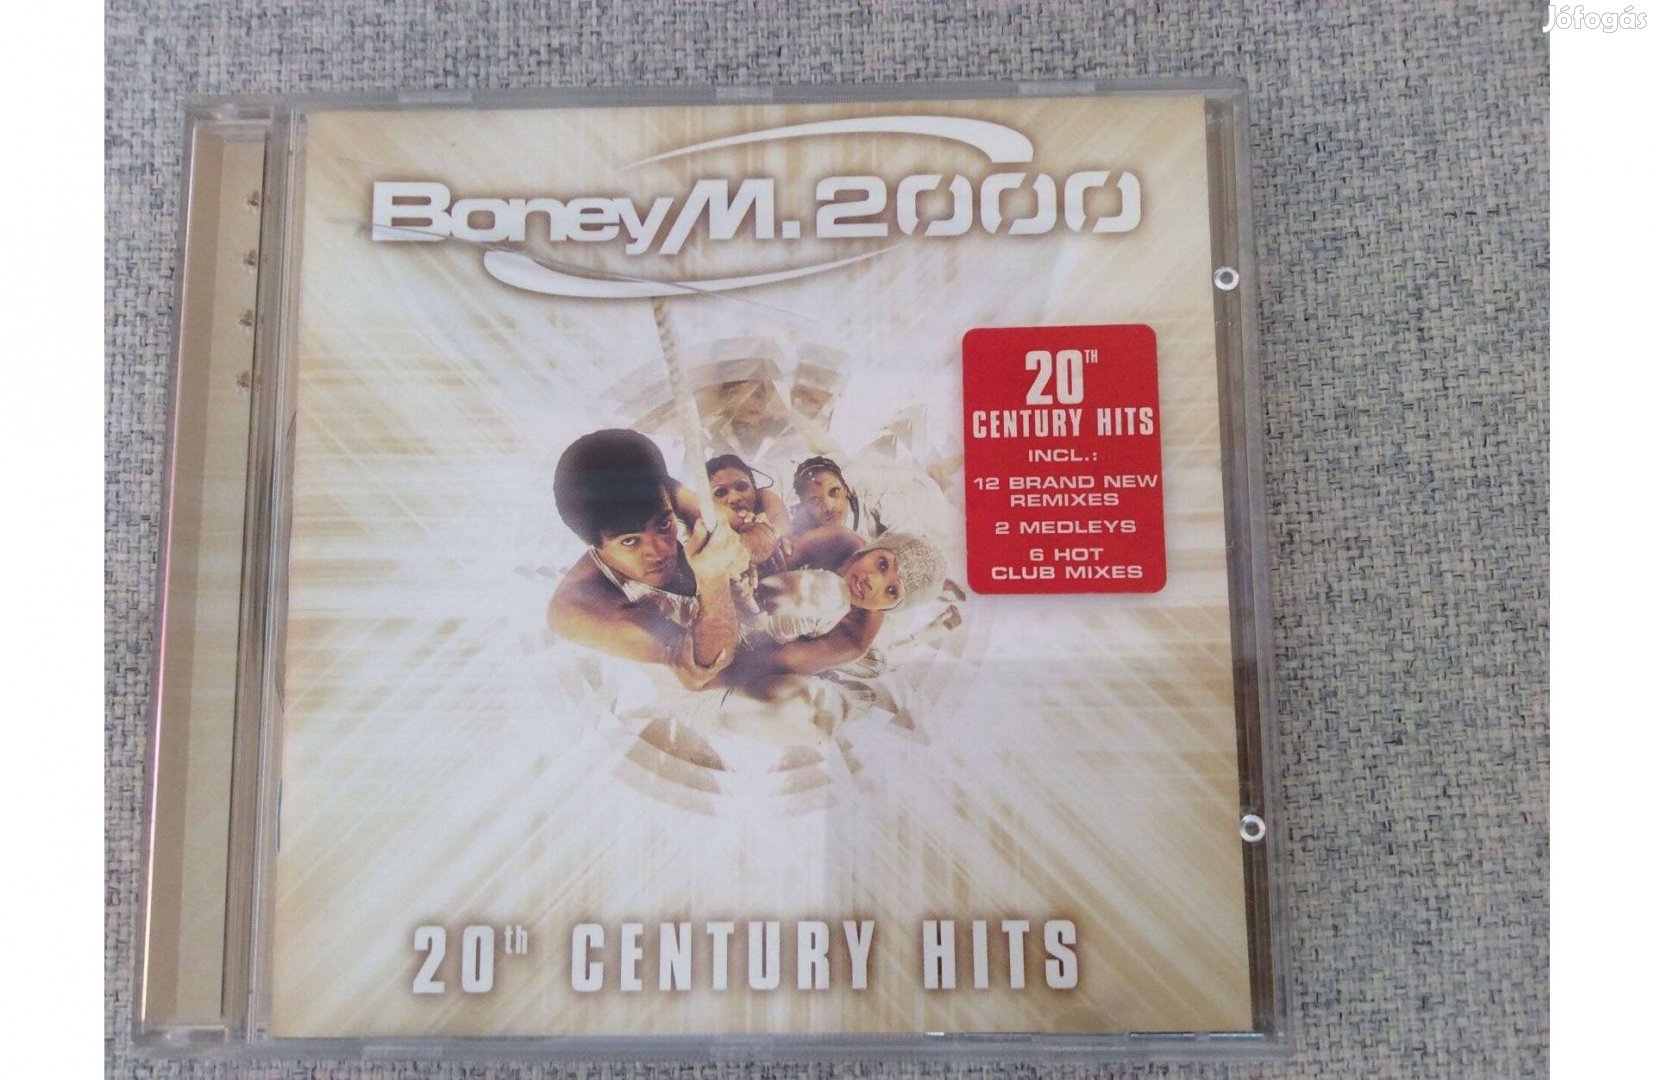 Boney M CD Boney M 2000 20 century Hits